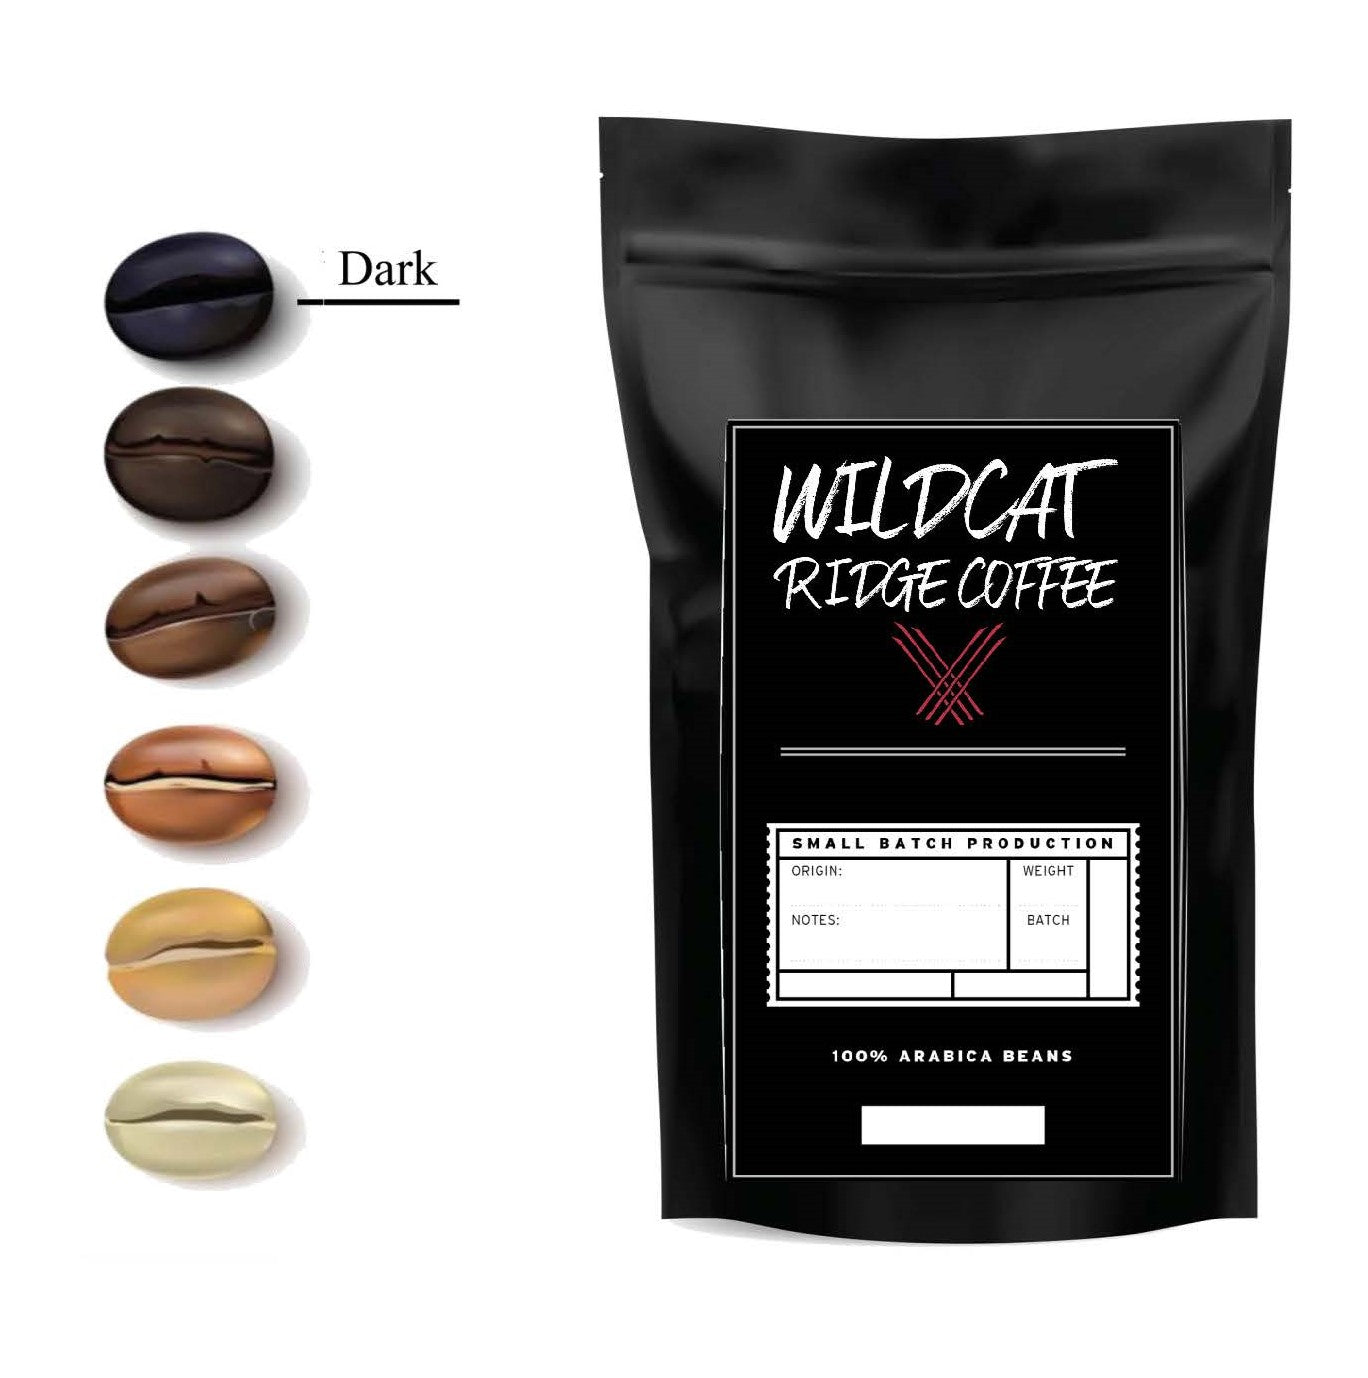 Seattle Blend - Wildcat Ridge Coffee